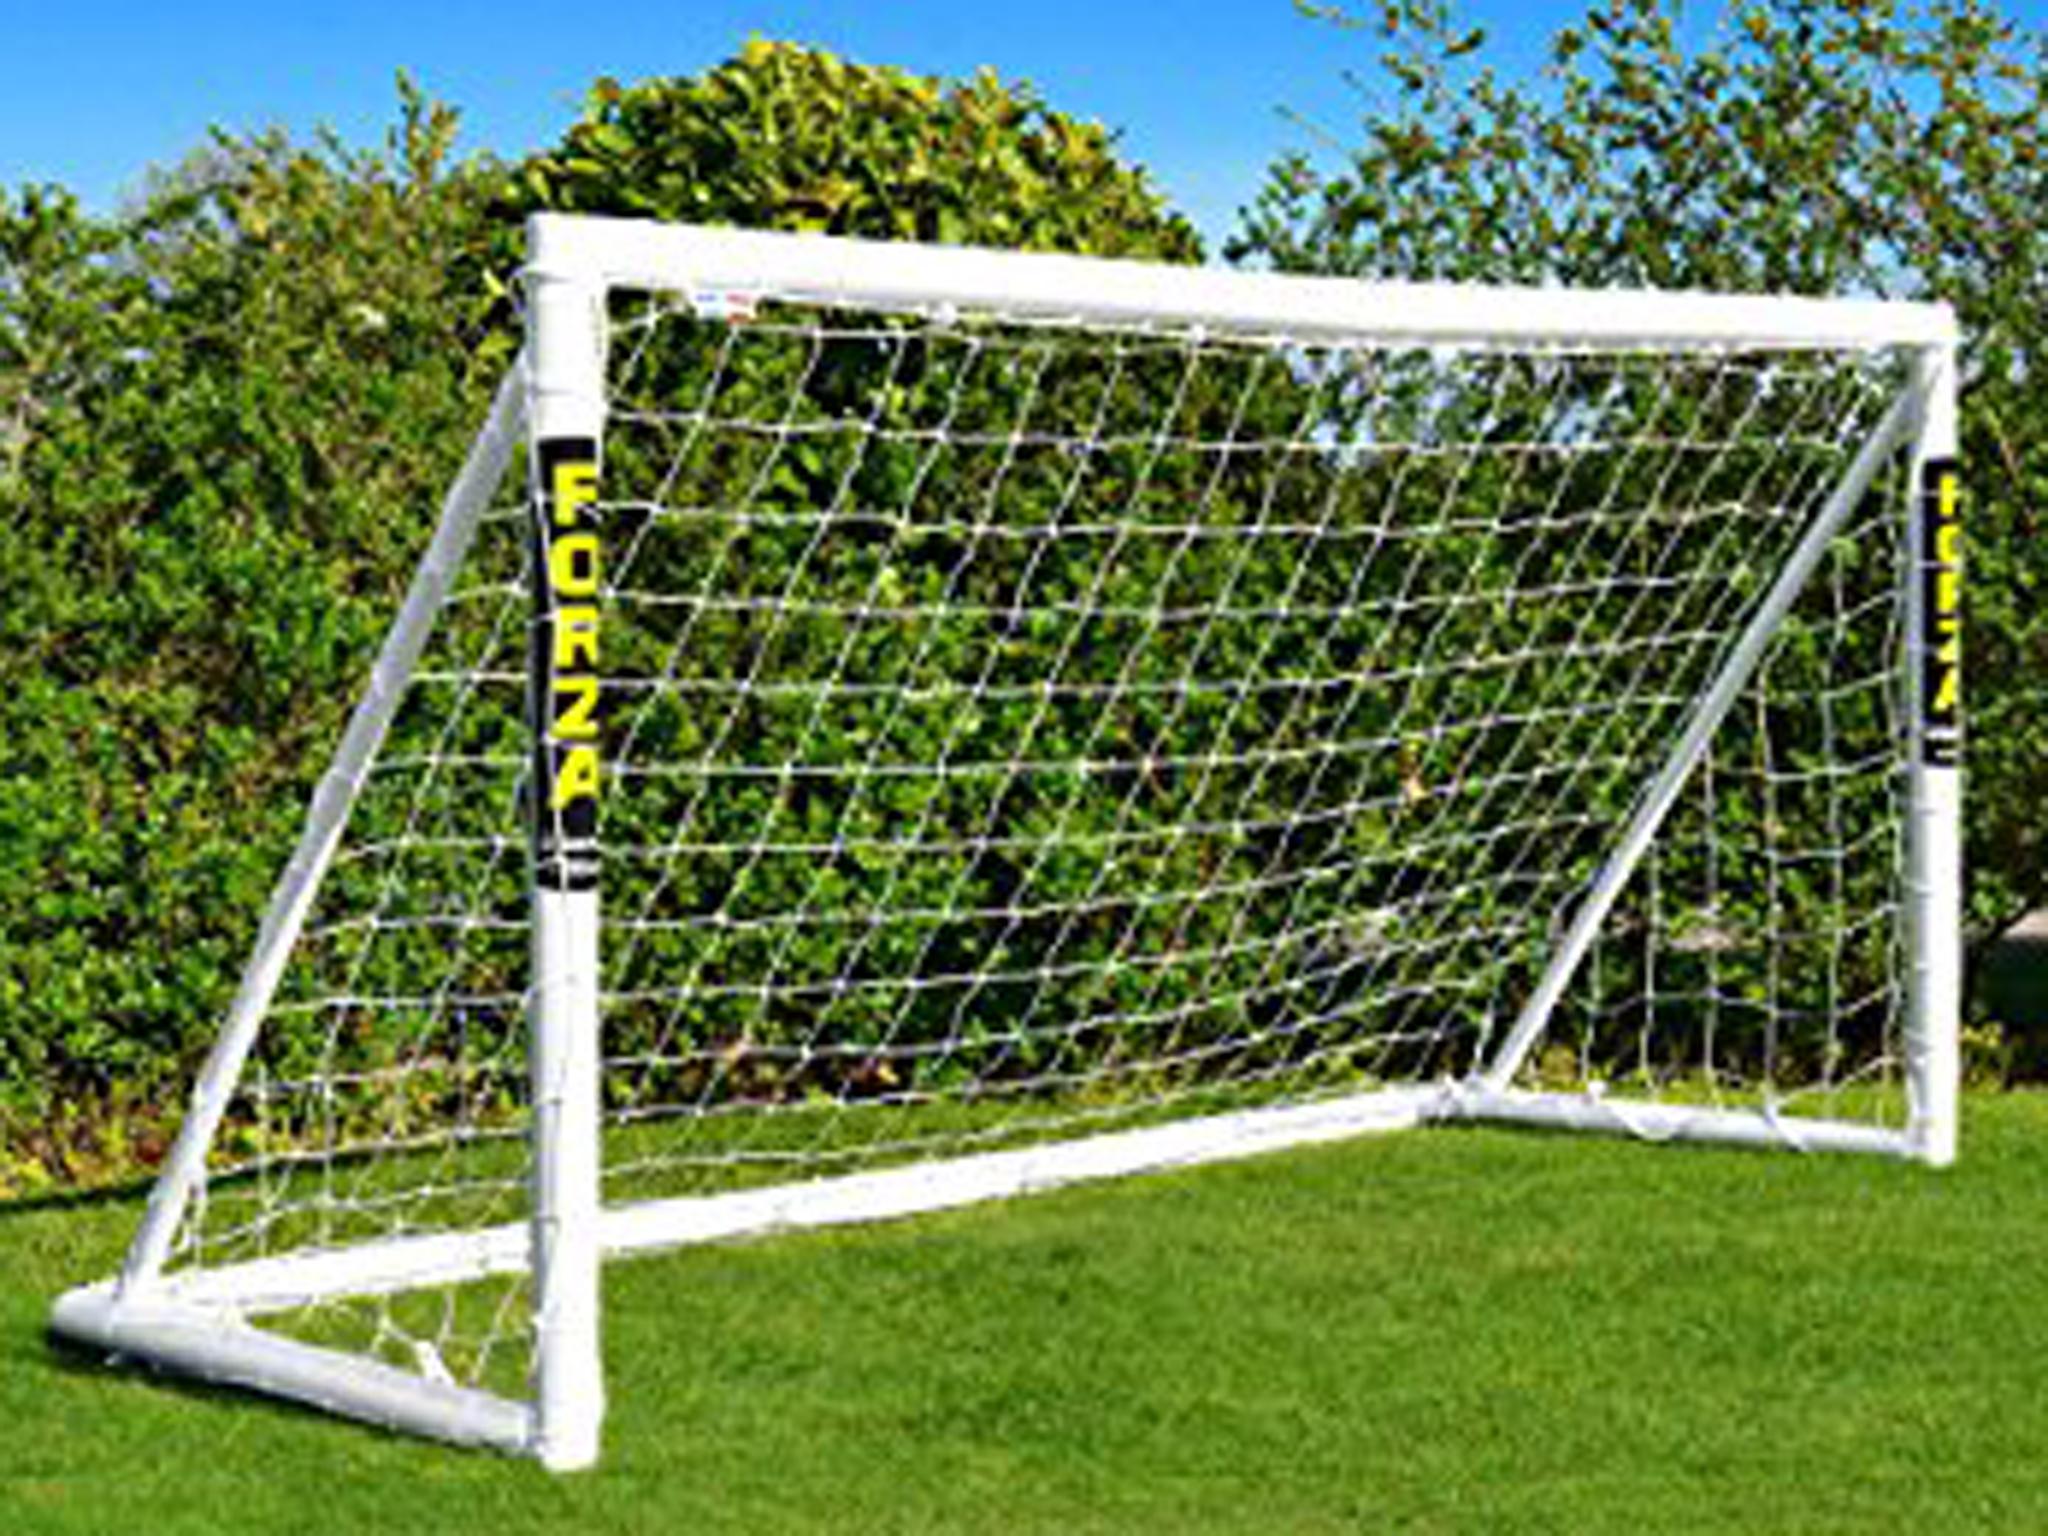 – Portable Kids Practice Target Goal 3 Sizes FORZA Flash Pop-Up Soccer Goal 